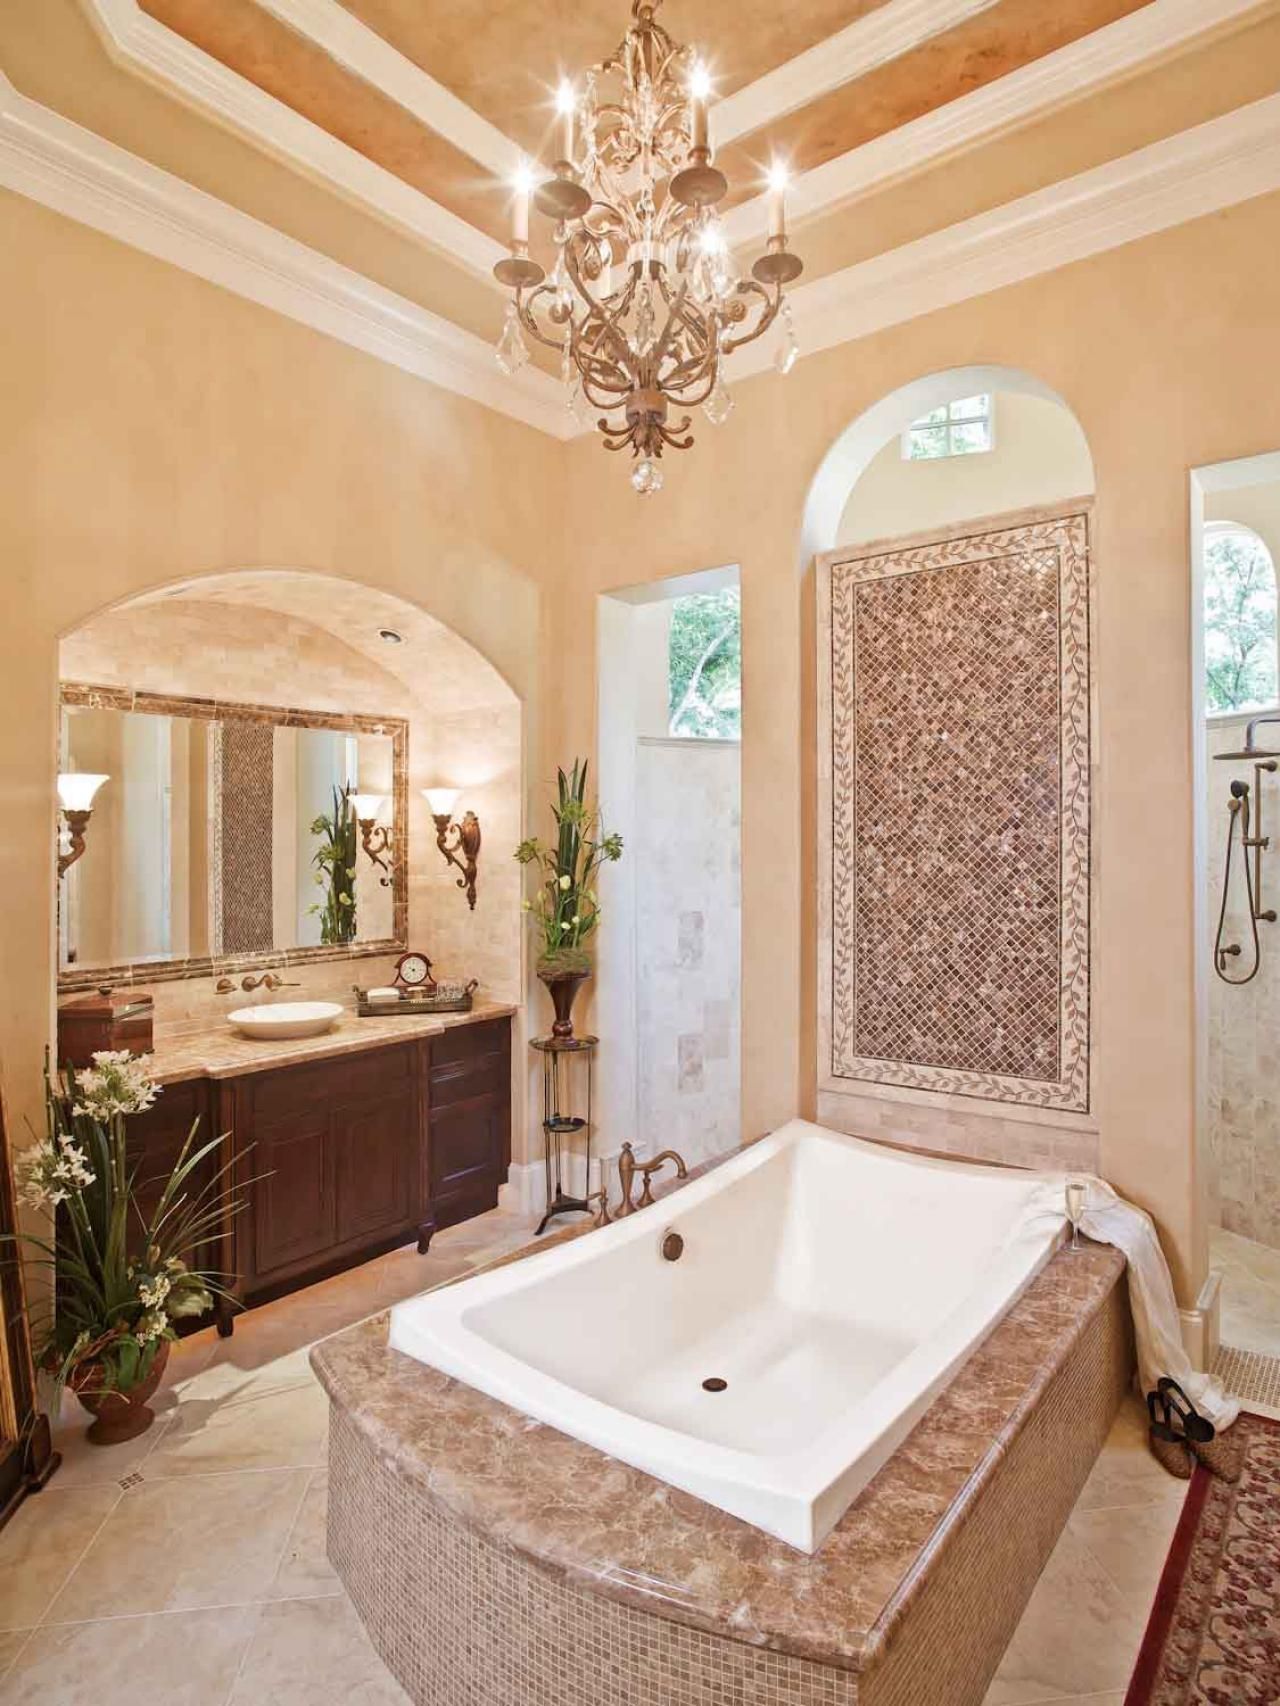 Appropriate Bathroom Chandeliers Teresasdesk Amazing Home With Chandeliers For The Bathroom (Photo 14 of 25)